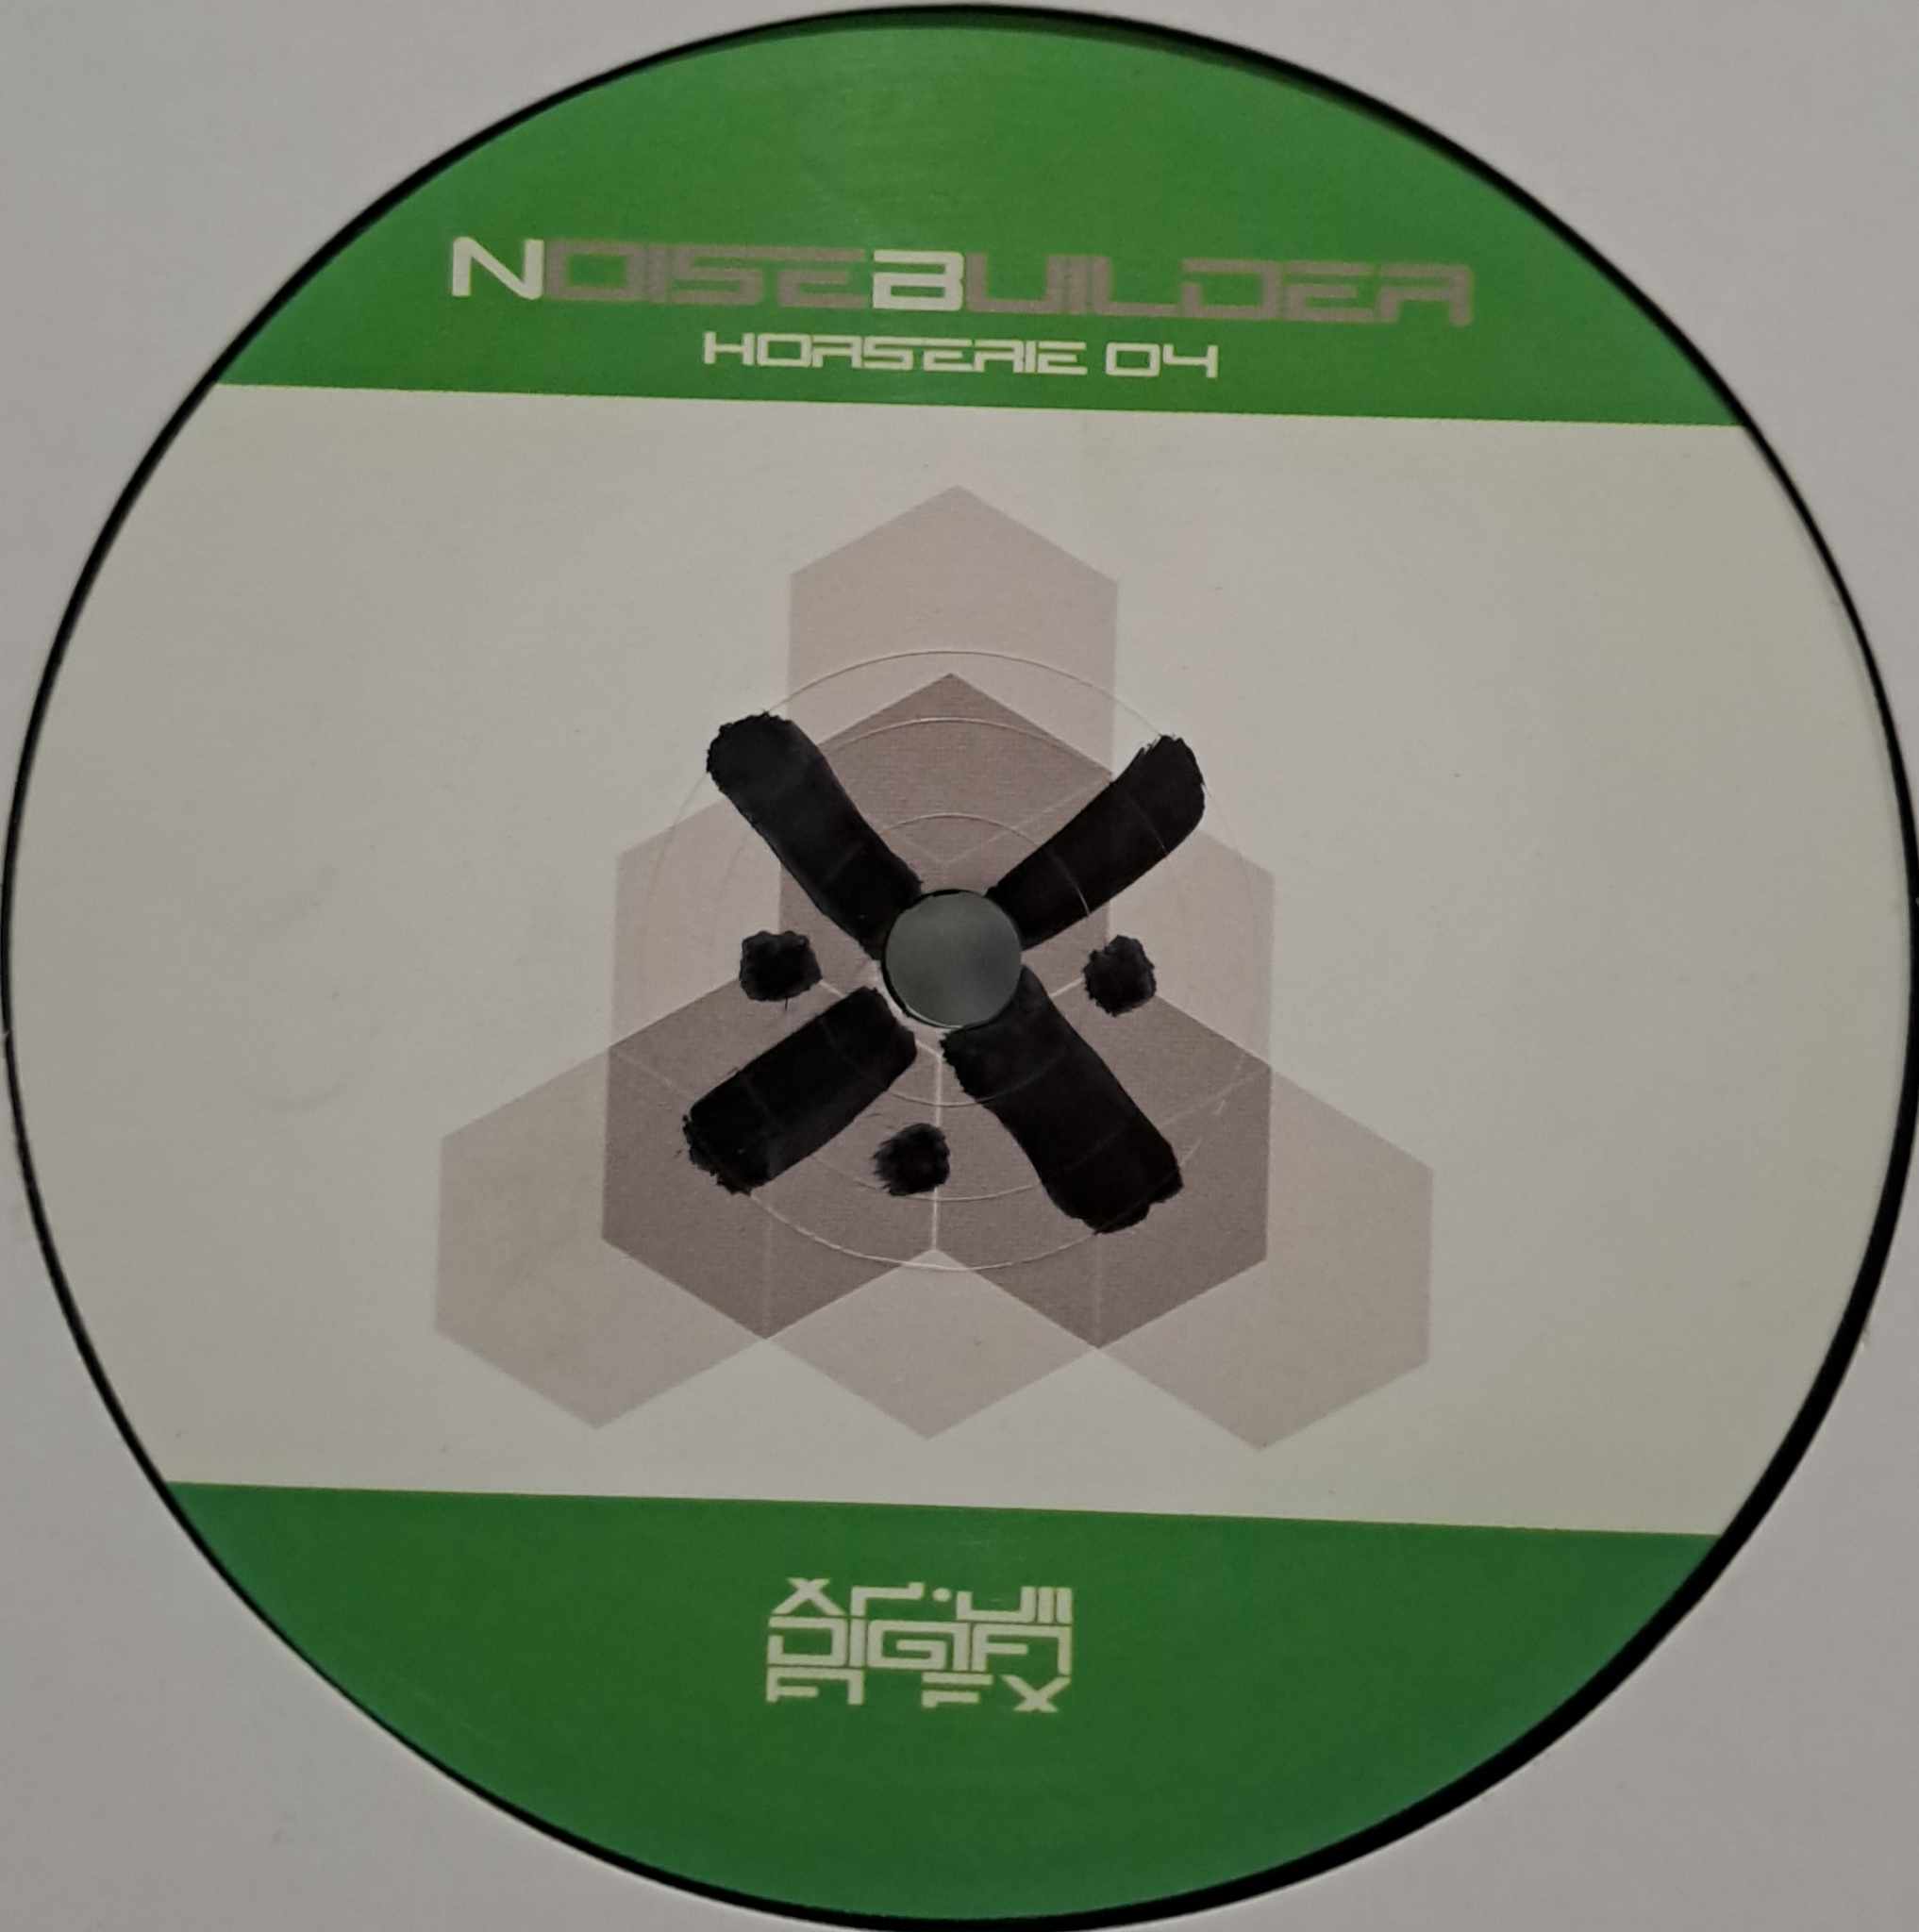 Noisebuilder Horserie 04 - vinyle electro